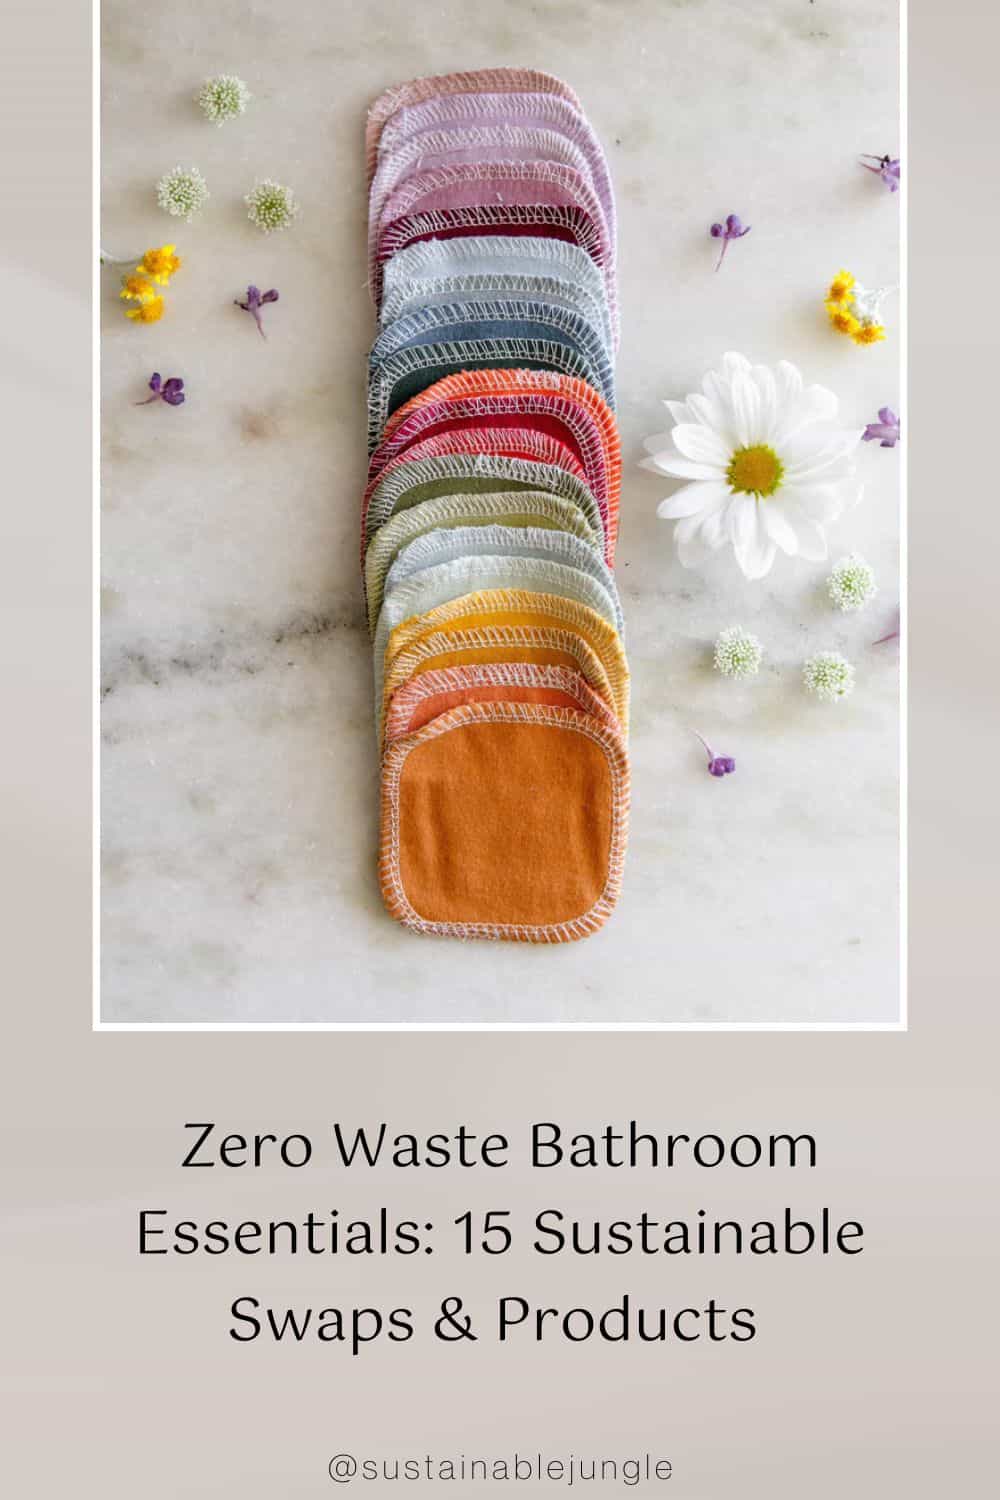 Zero Waste Bathroom Essentials: 15 Sustainable Swaps & Products Image by ZeroWasteStore #zerowastebathroom #zerowastebathroomproducts #plasticfreebathroom #plasticfreebathroomproducts #zerowastebathroomswaps #zerowastebathroomideas #sustainablejungle